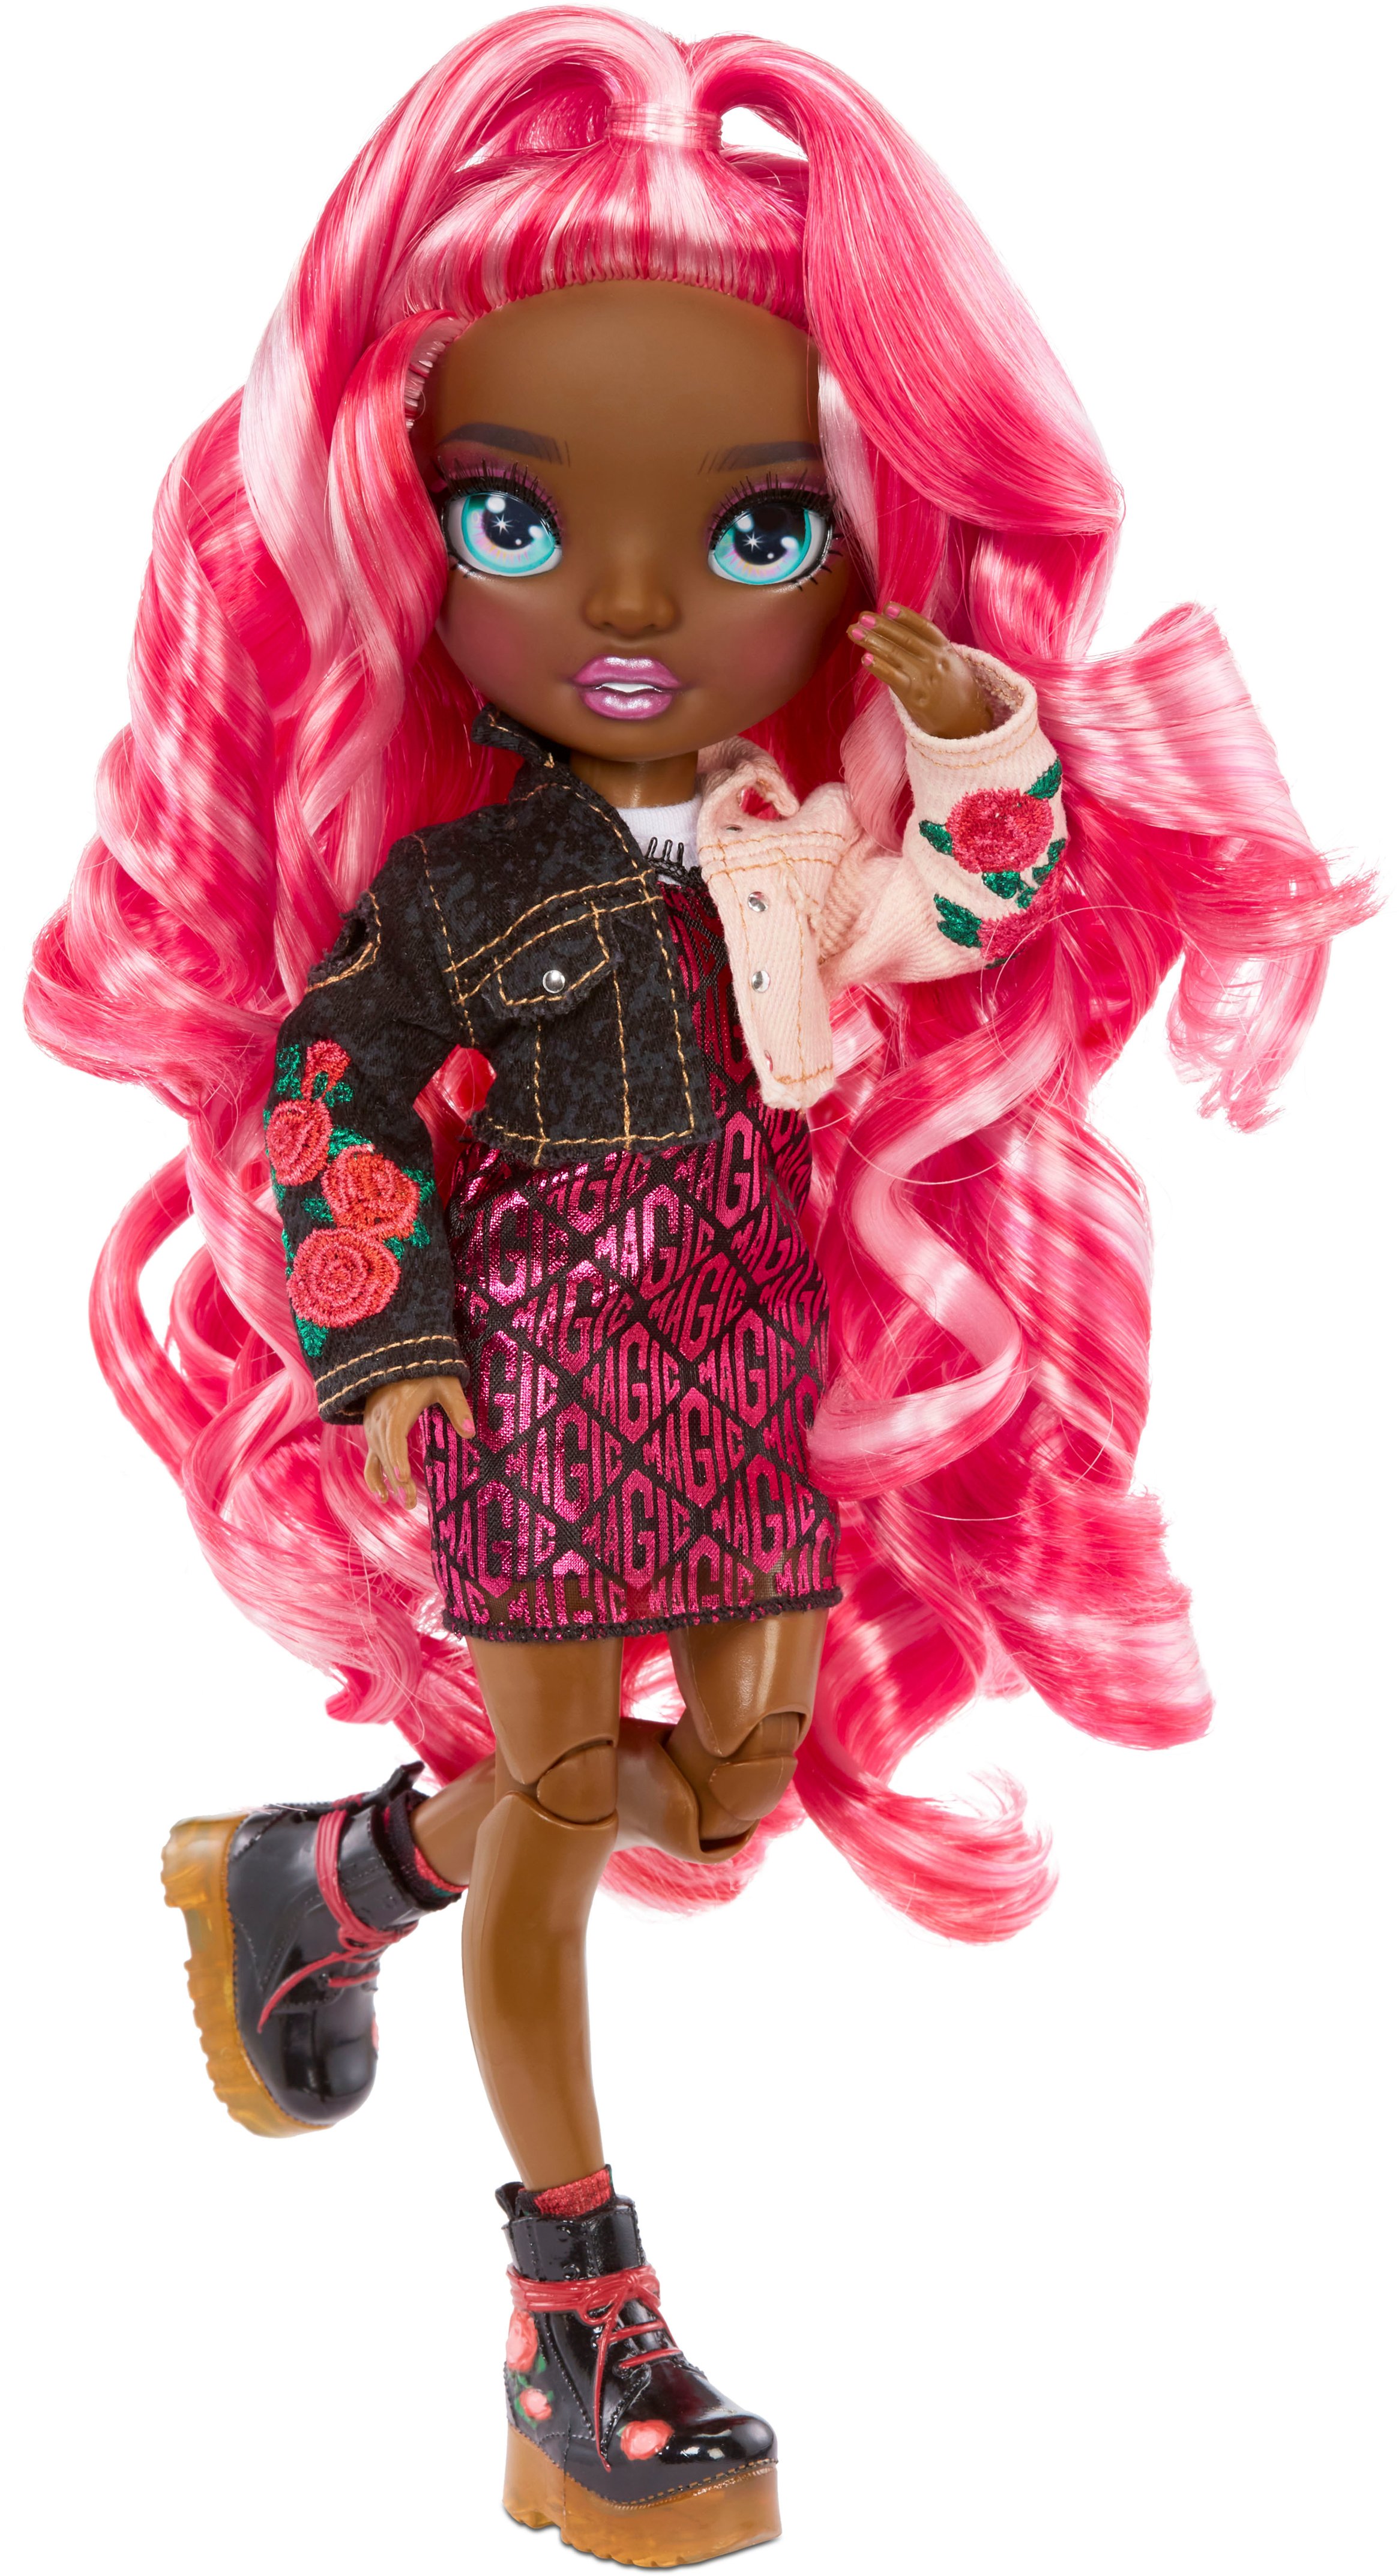 Angle View: Rainbow High Fashion Doll- Daria Roselyn (Rose)